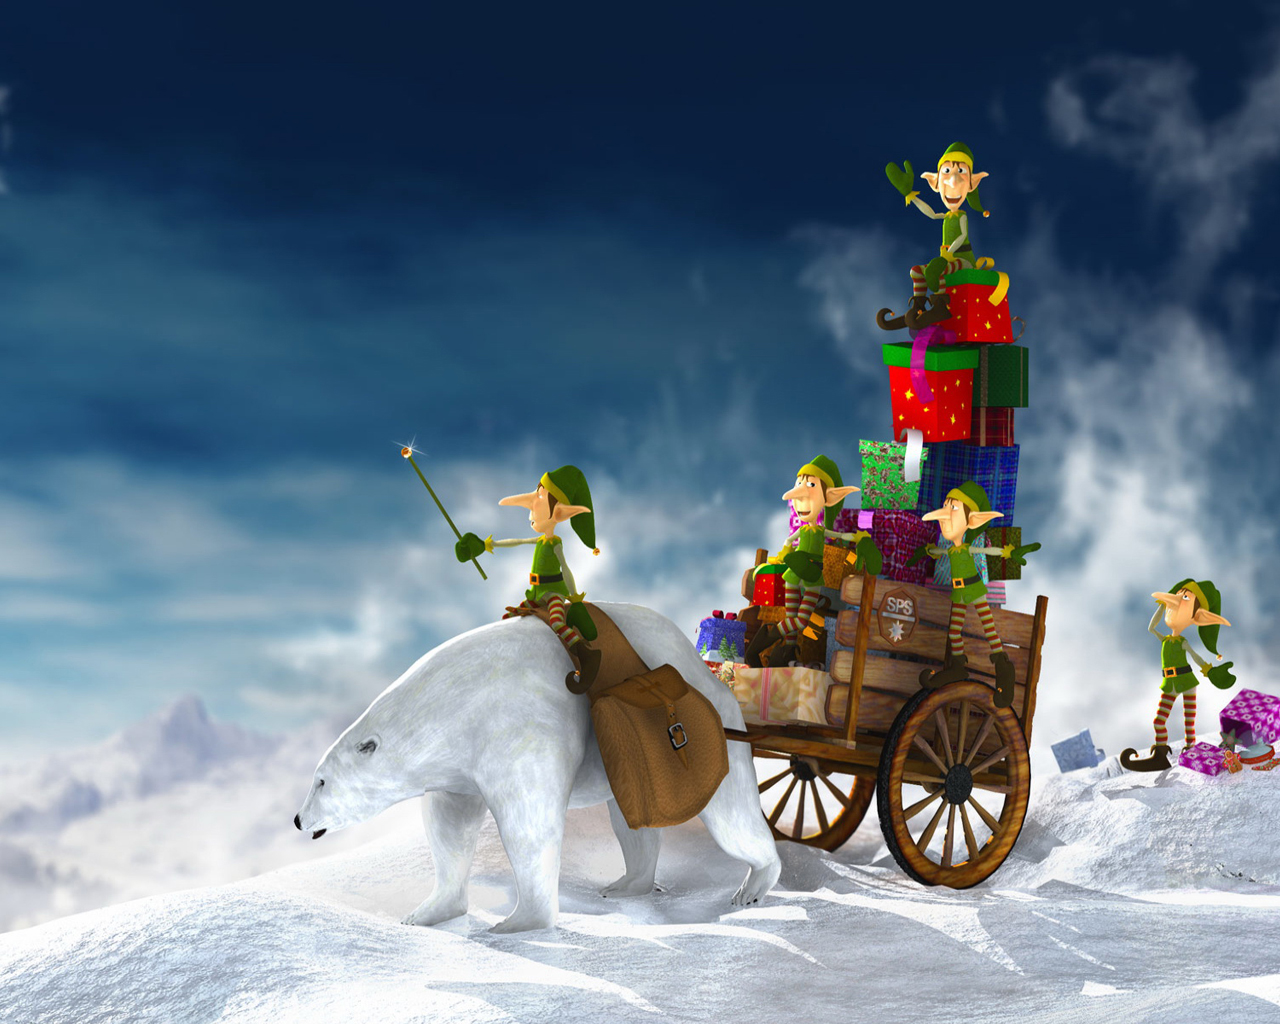 Animated Christmas Wallpaper For Desktop Image